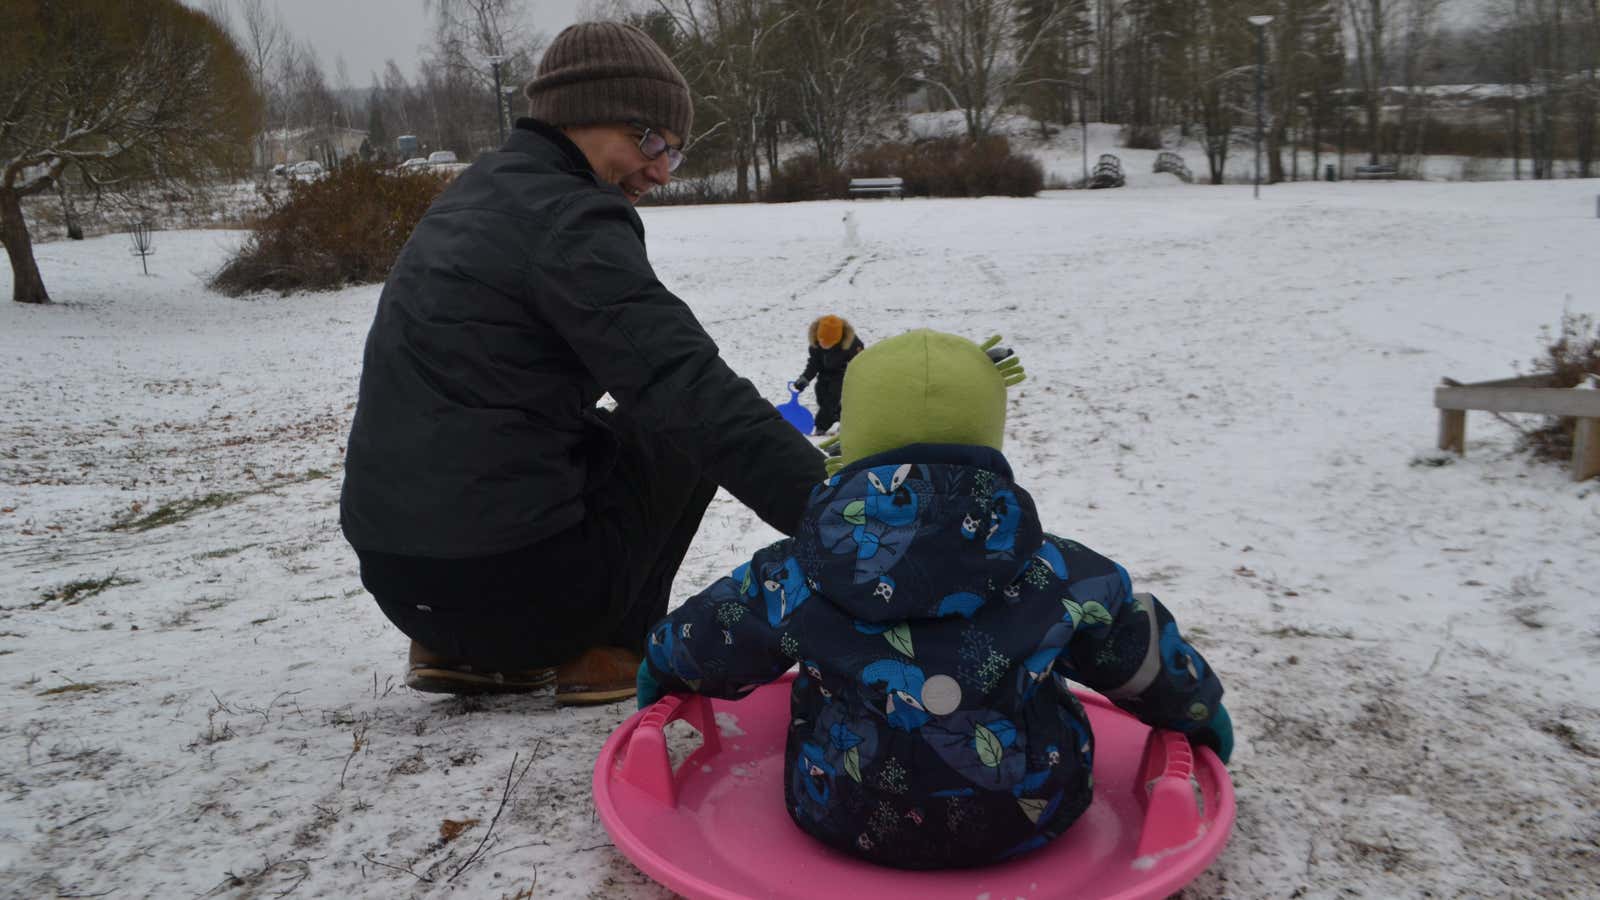 Timo Arona and his son Elias play in the snow outside the Kotikolo family café.